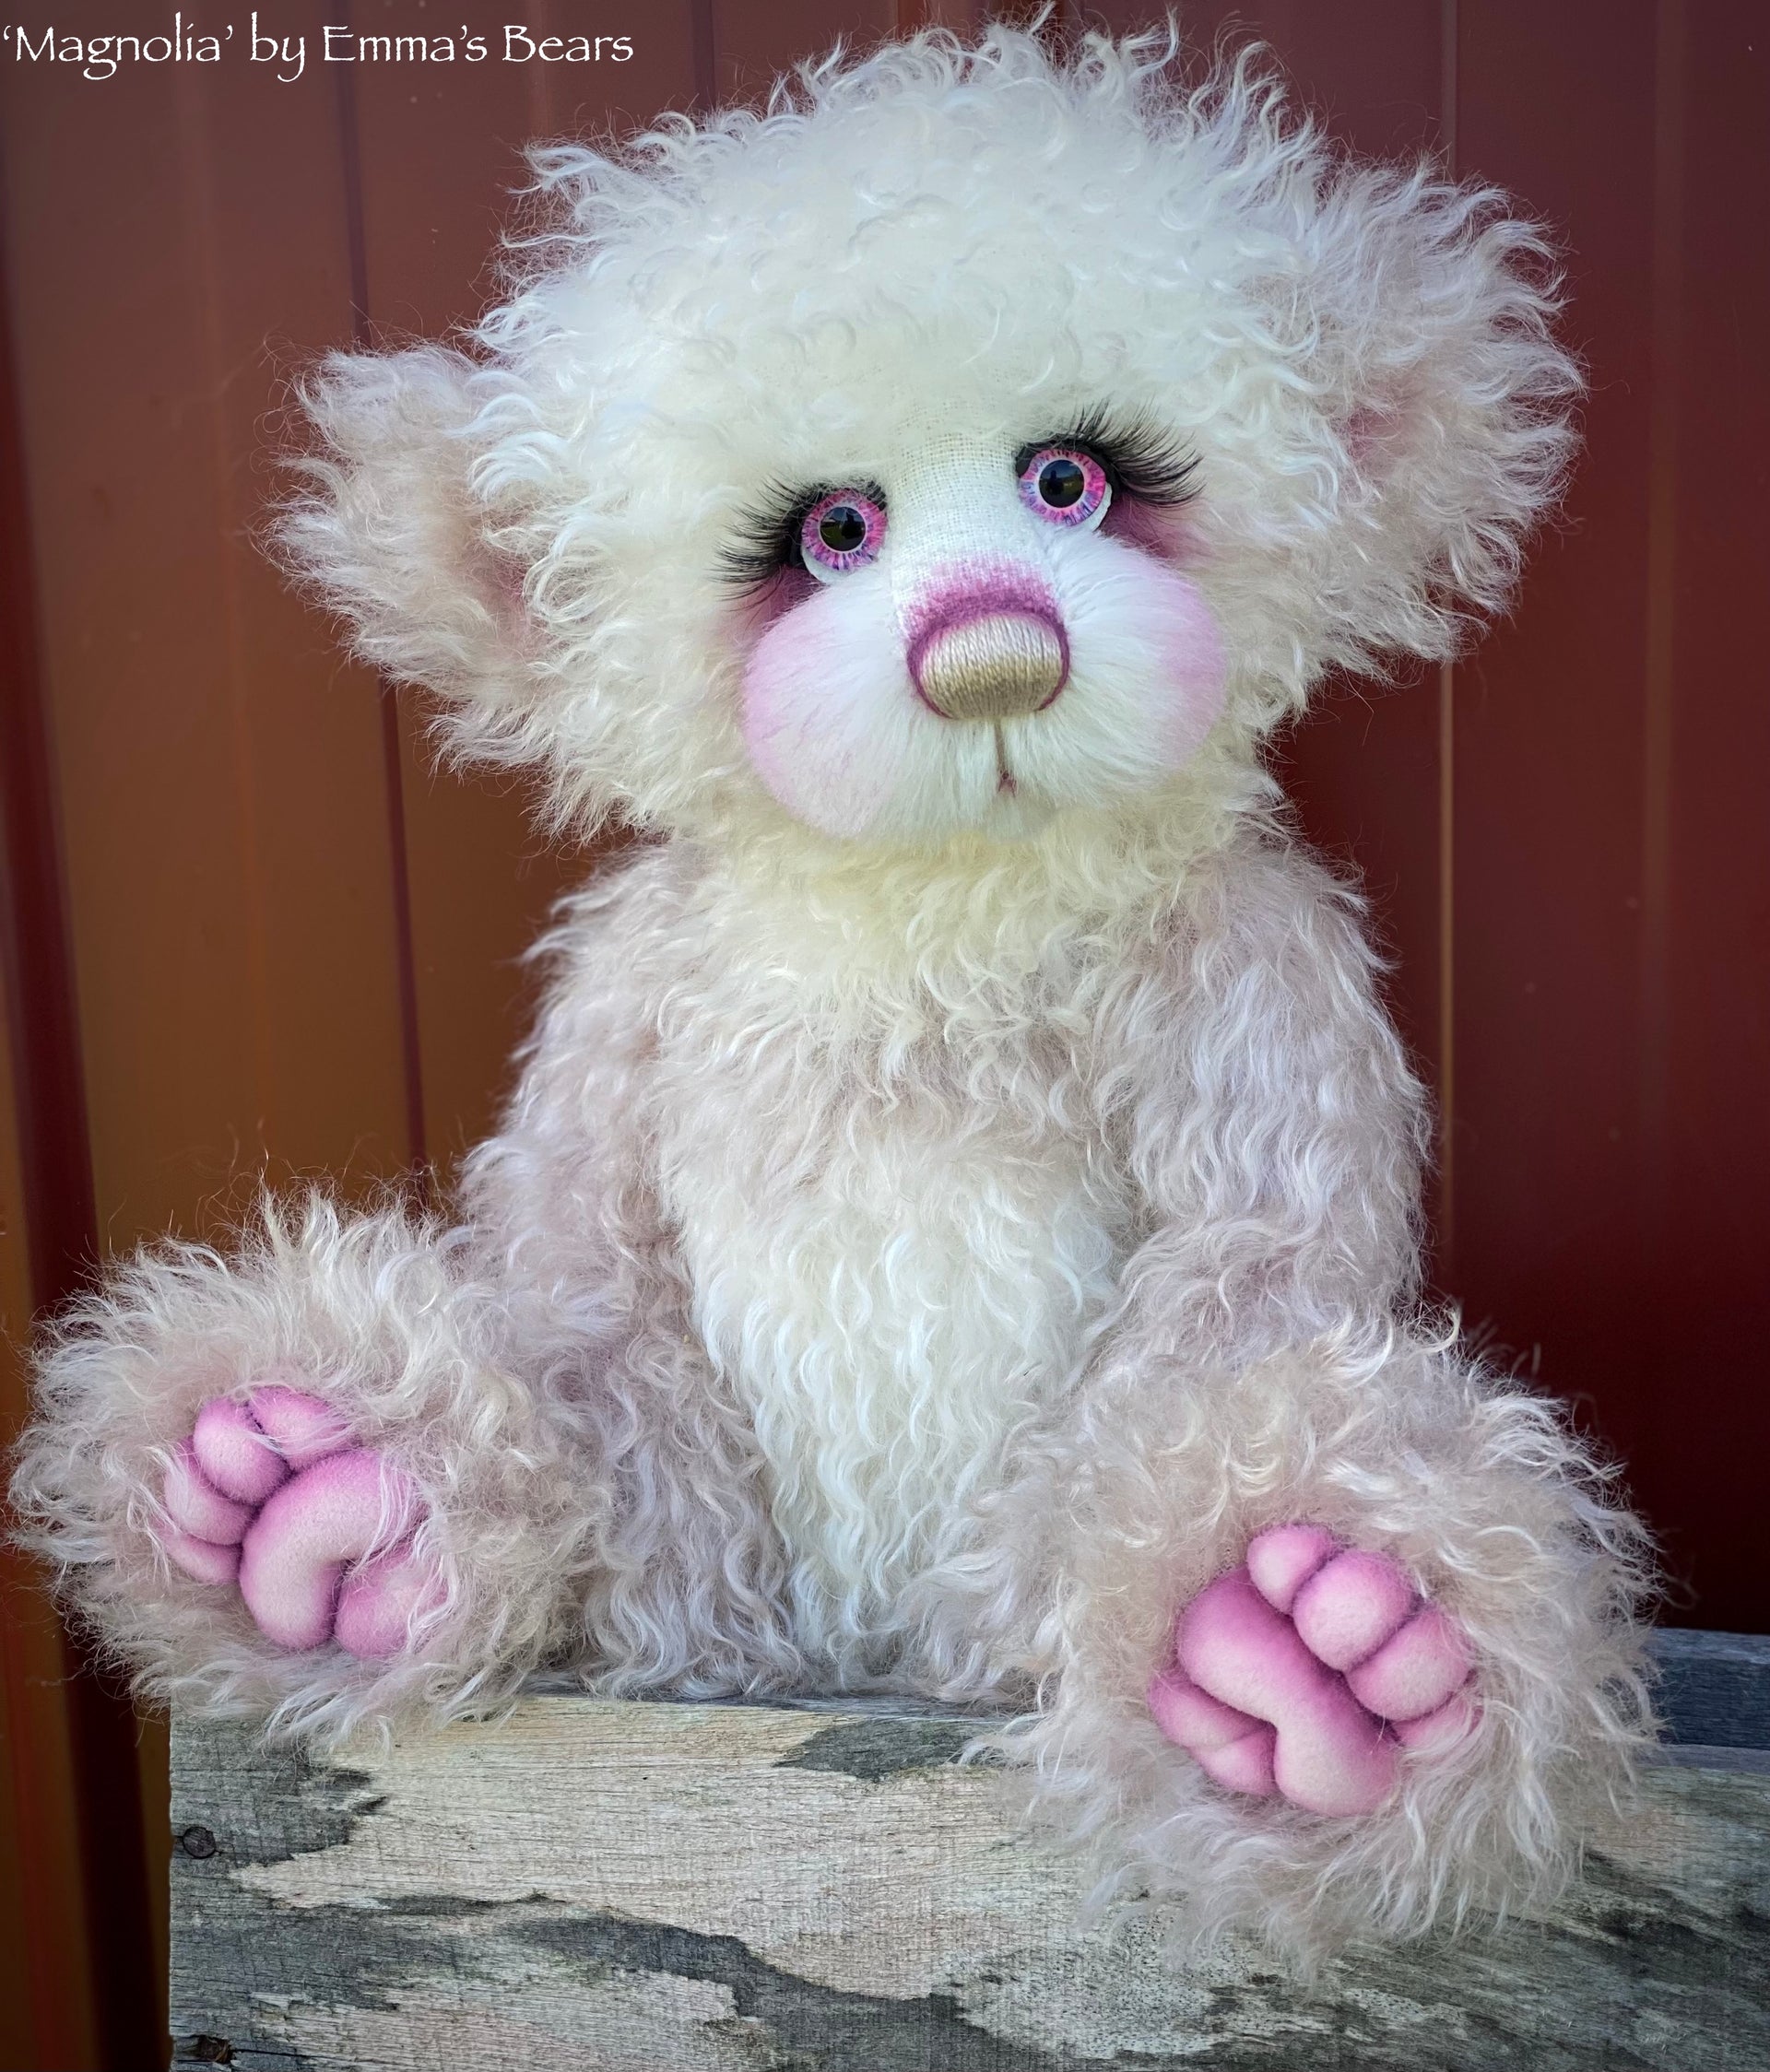 Magnolia - 16" Hand-dyed Curlylocks and Alpaca artist bear by Emma's Bears - OOAK